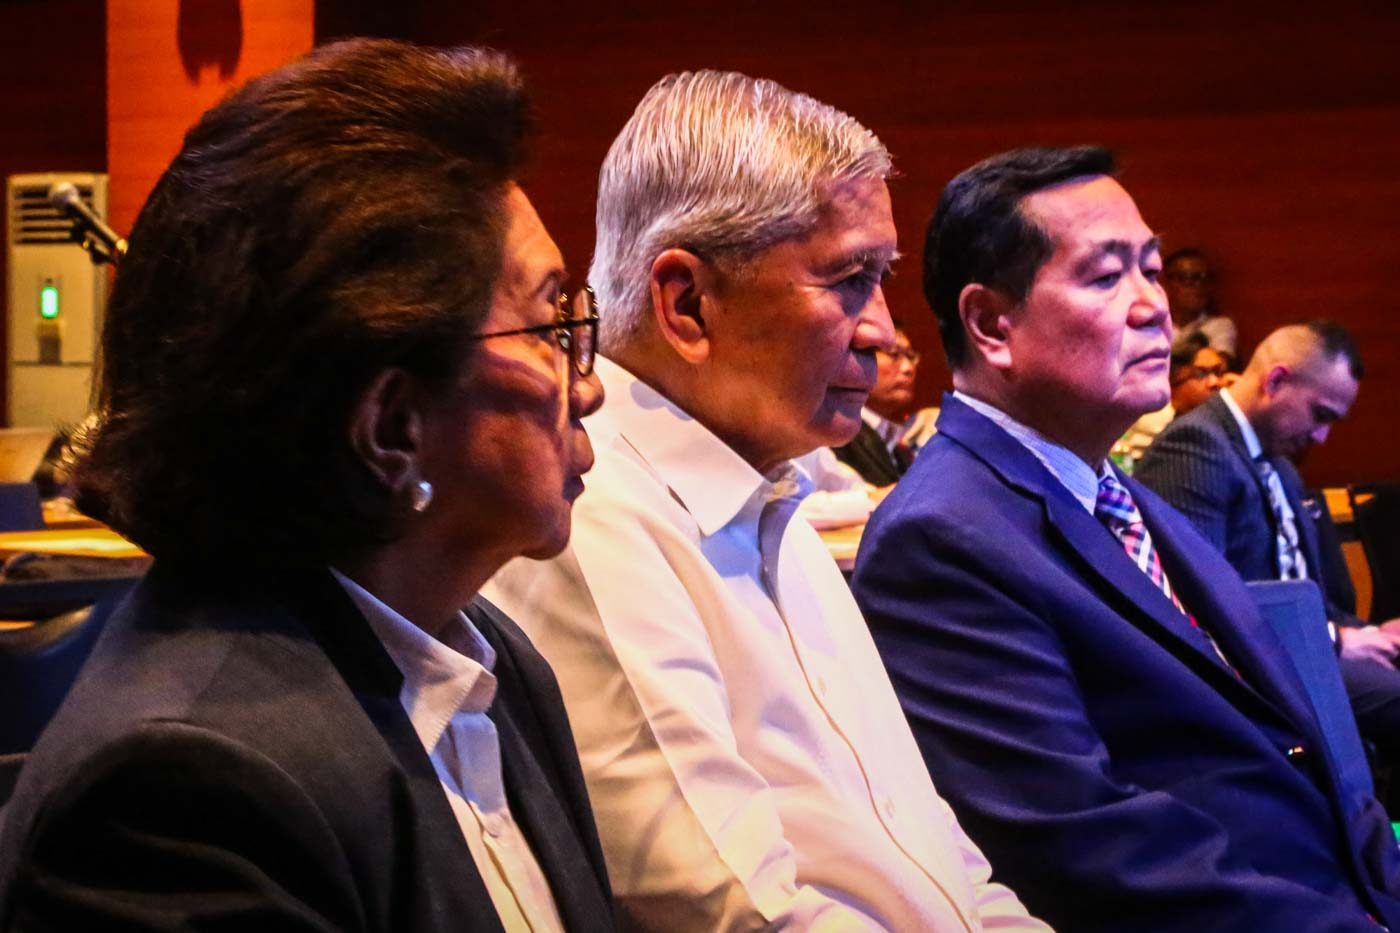 Powerhouse trio pushes Philippines to raise sea row at UN